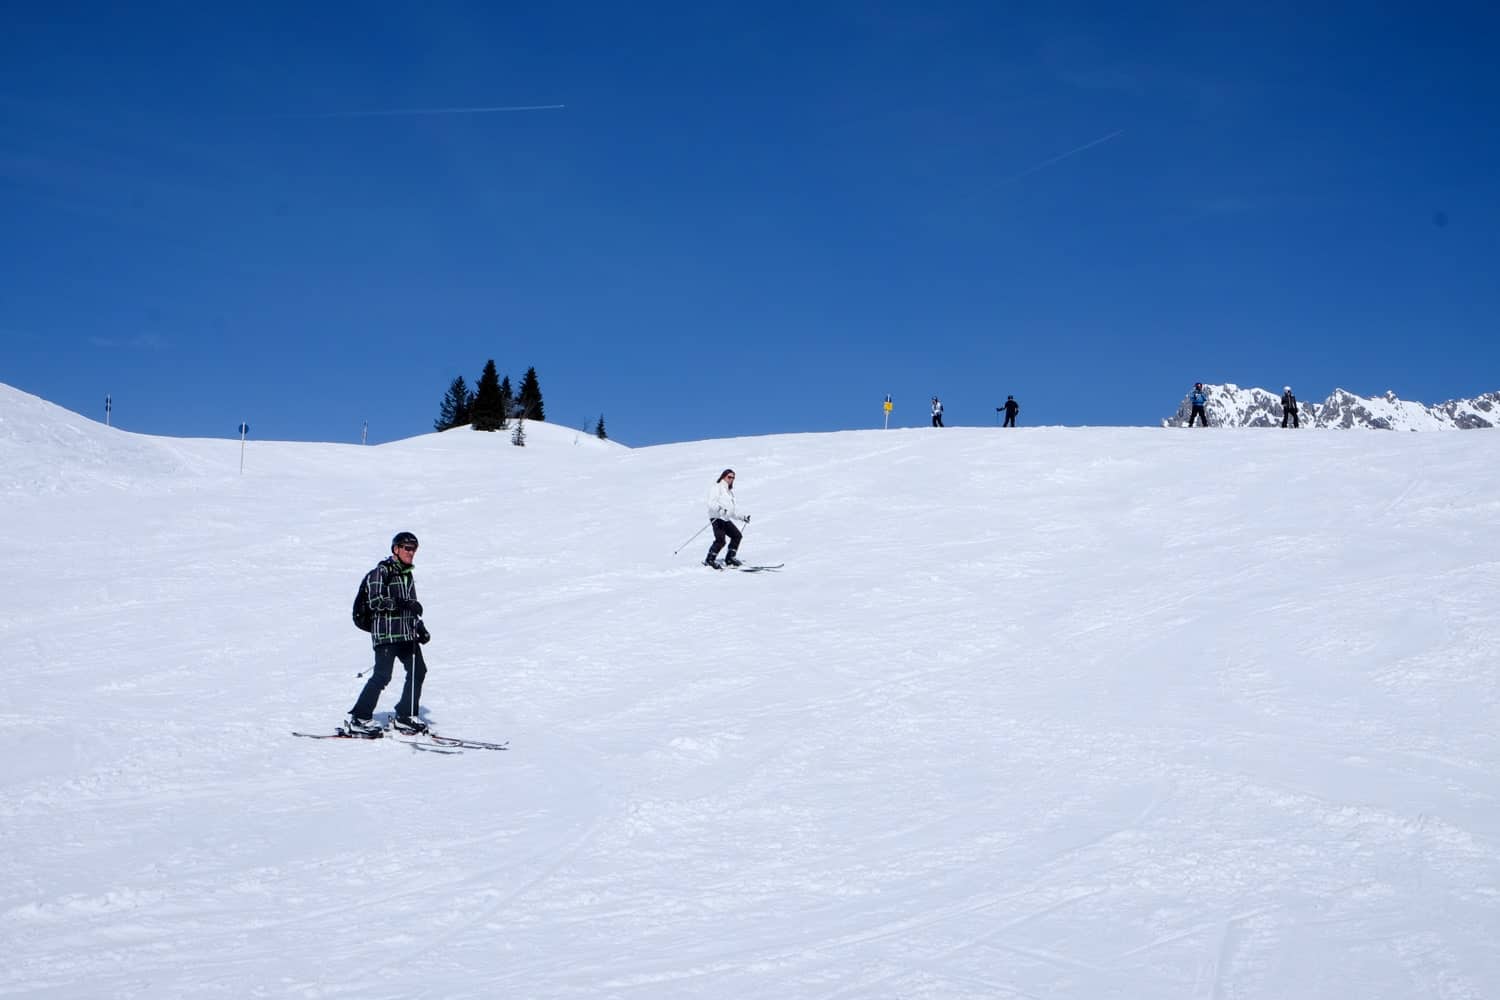 Skiing in Lech Zürs am Arlberg, Austria